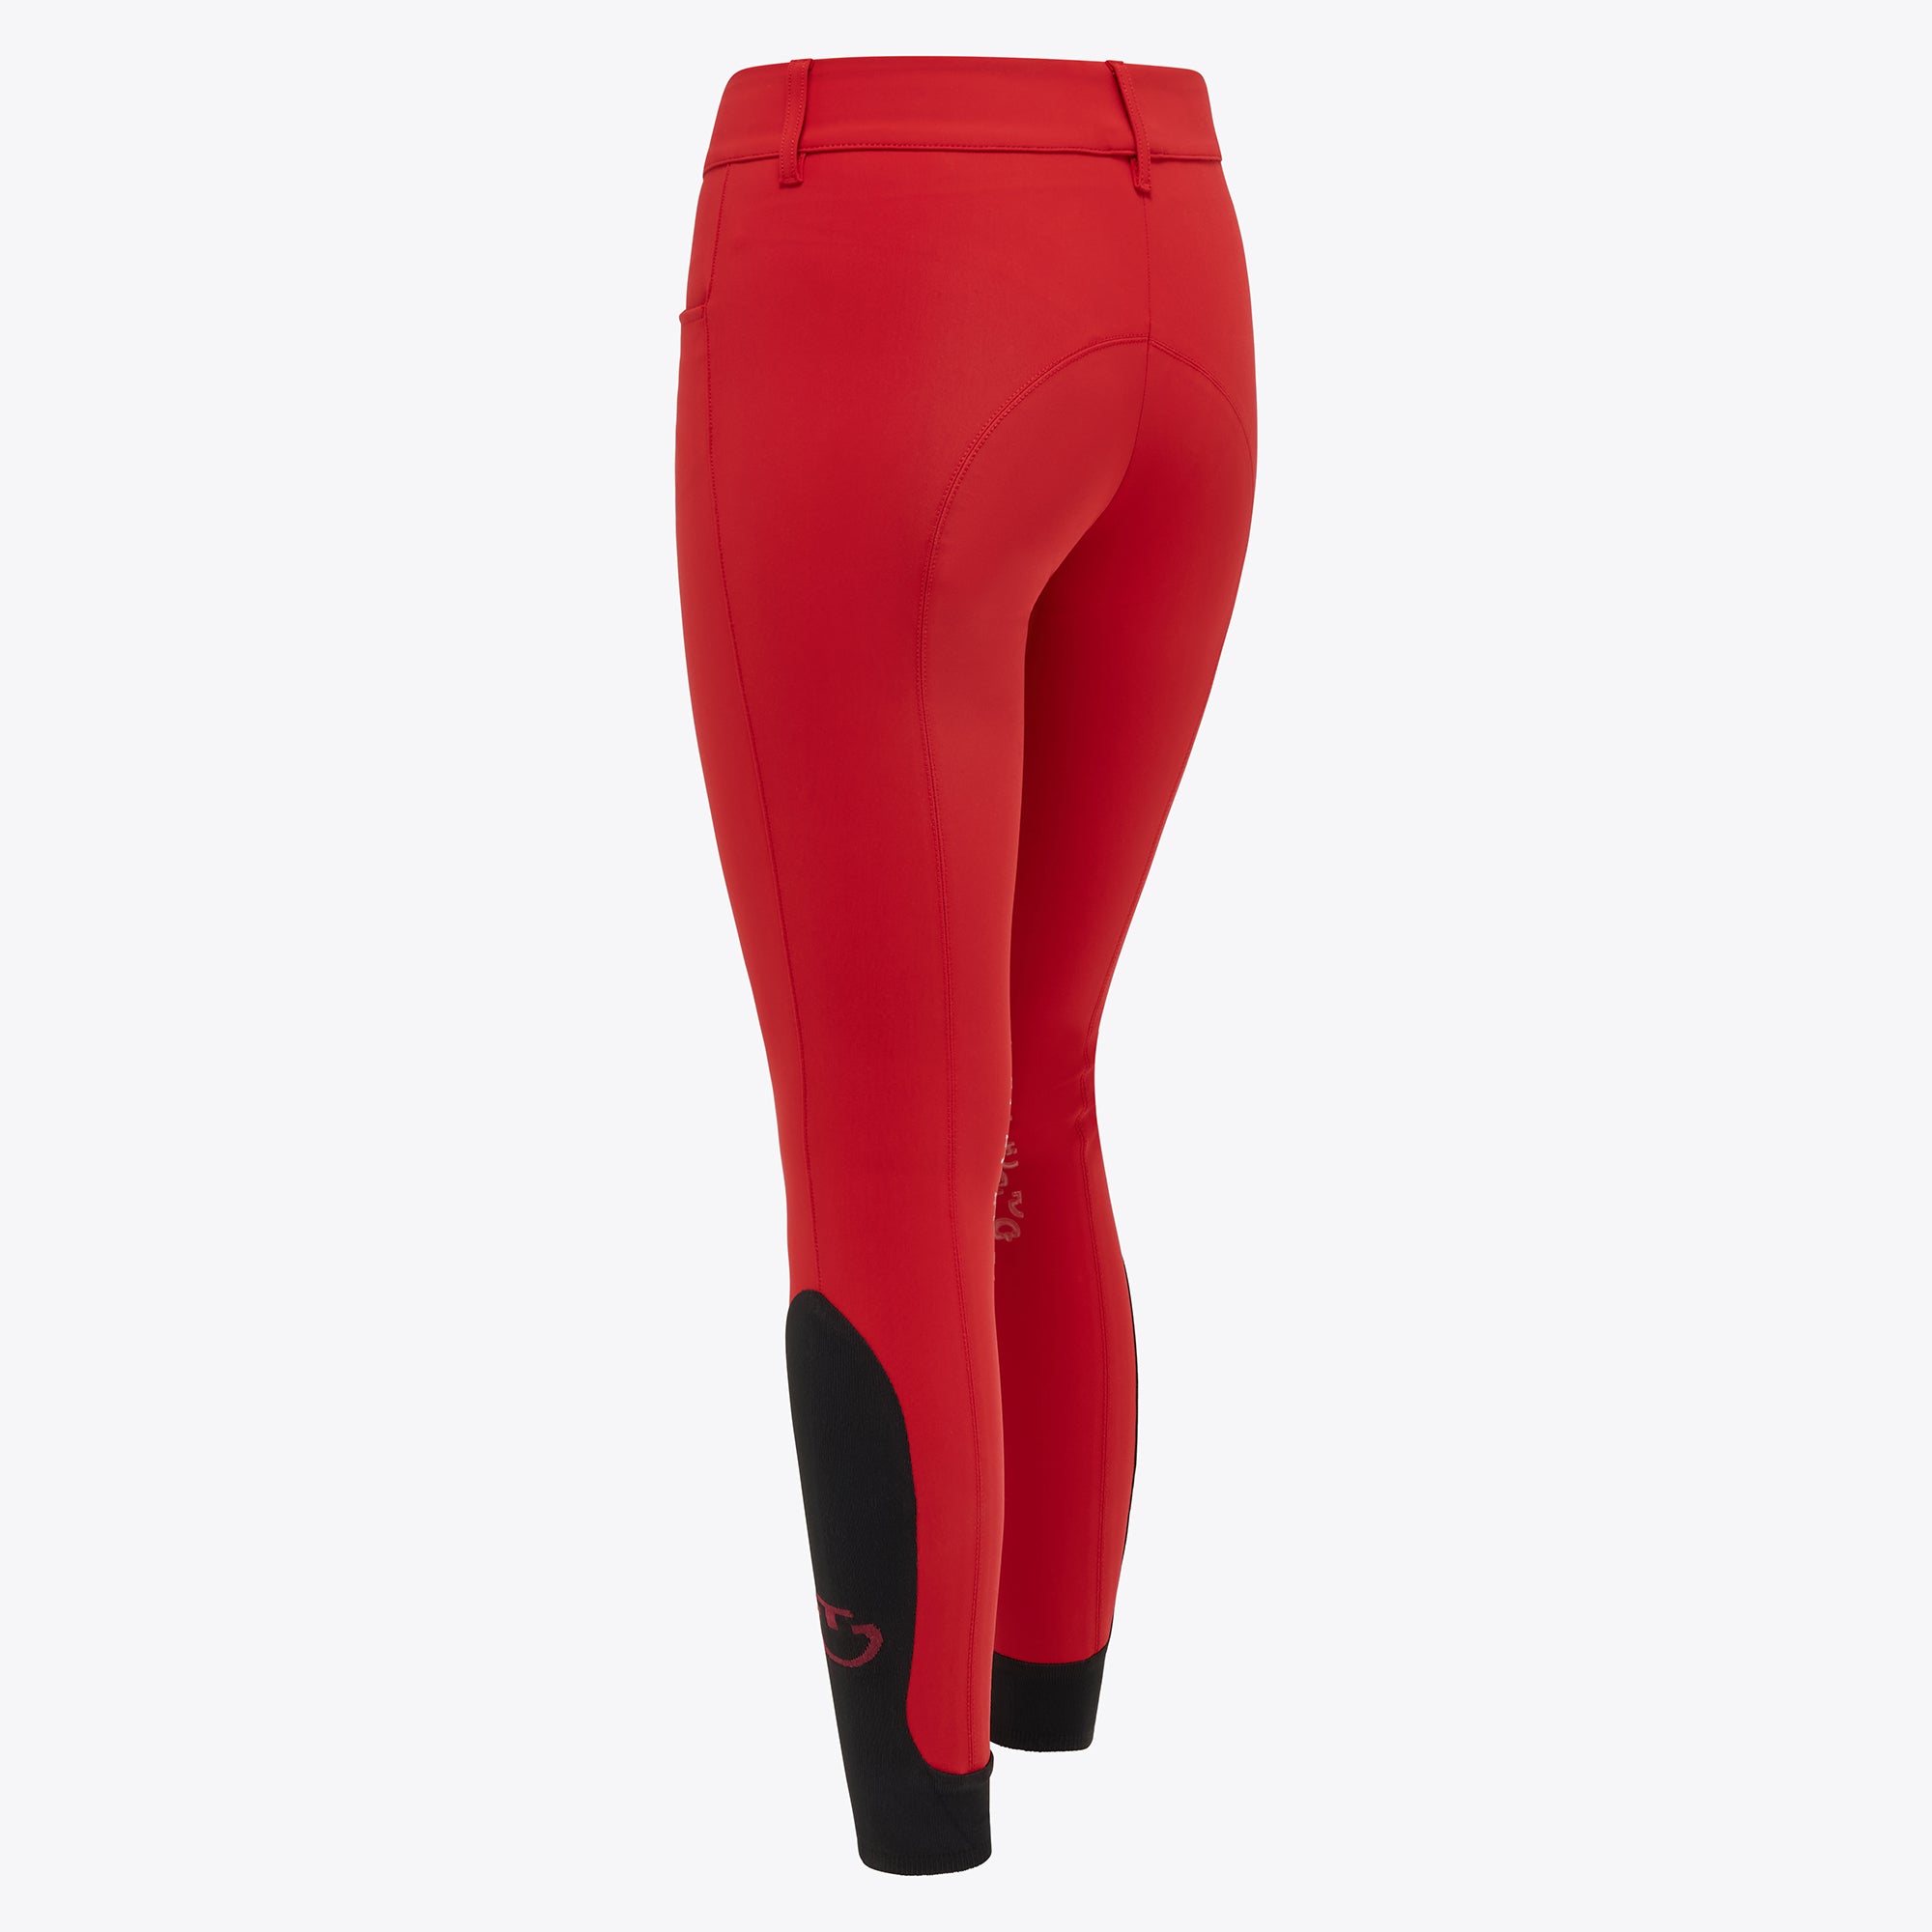 Red women's breeches with a high waist